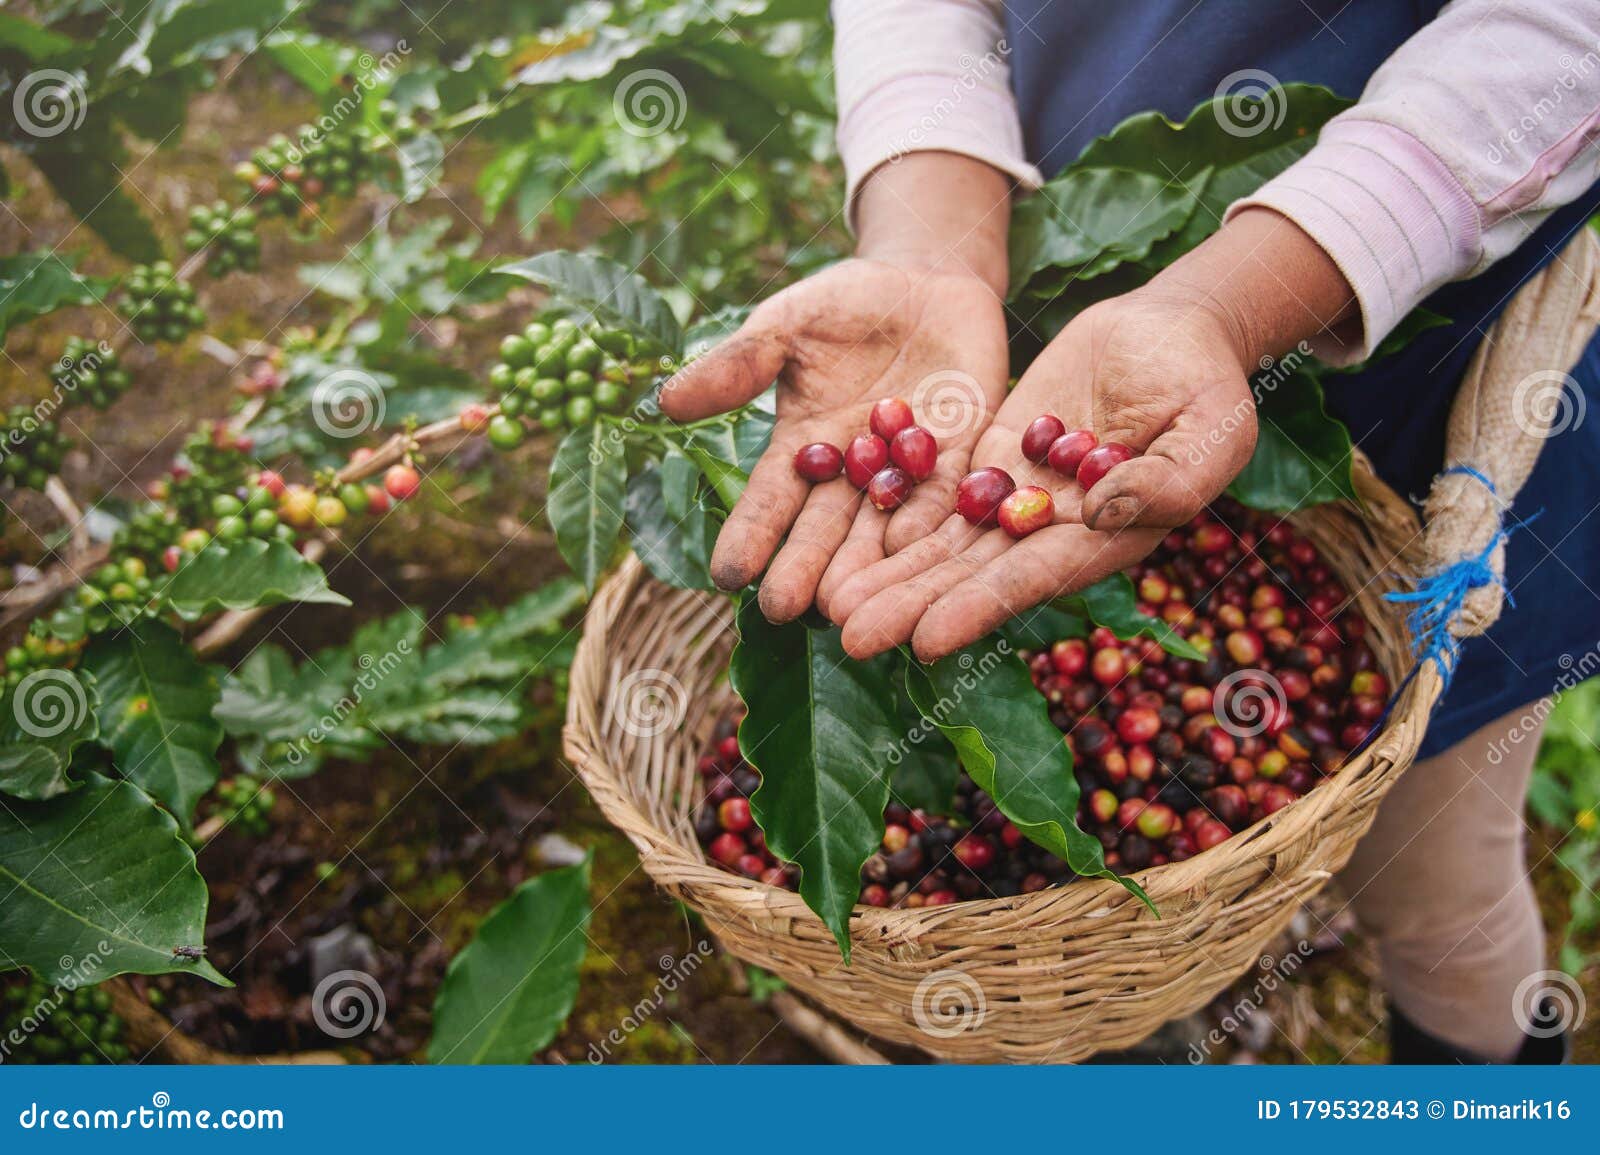 coffee picker show red cherries